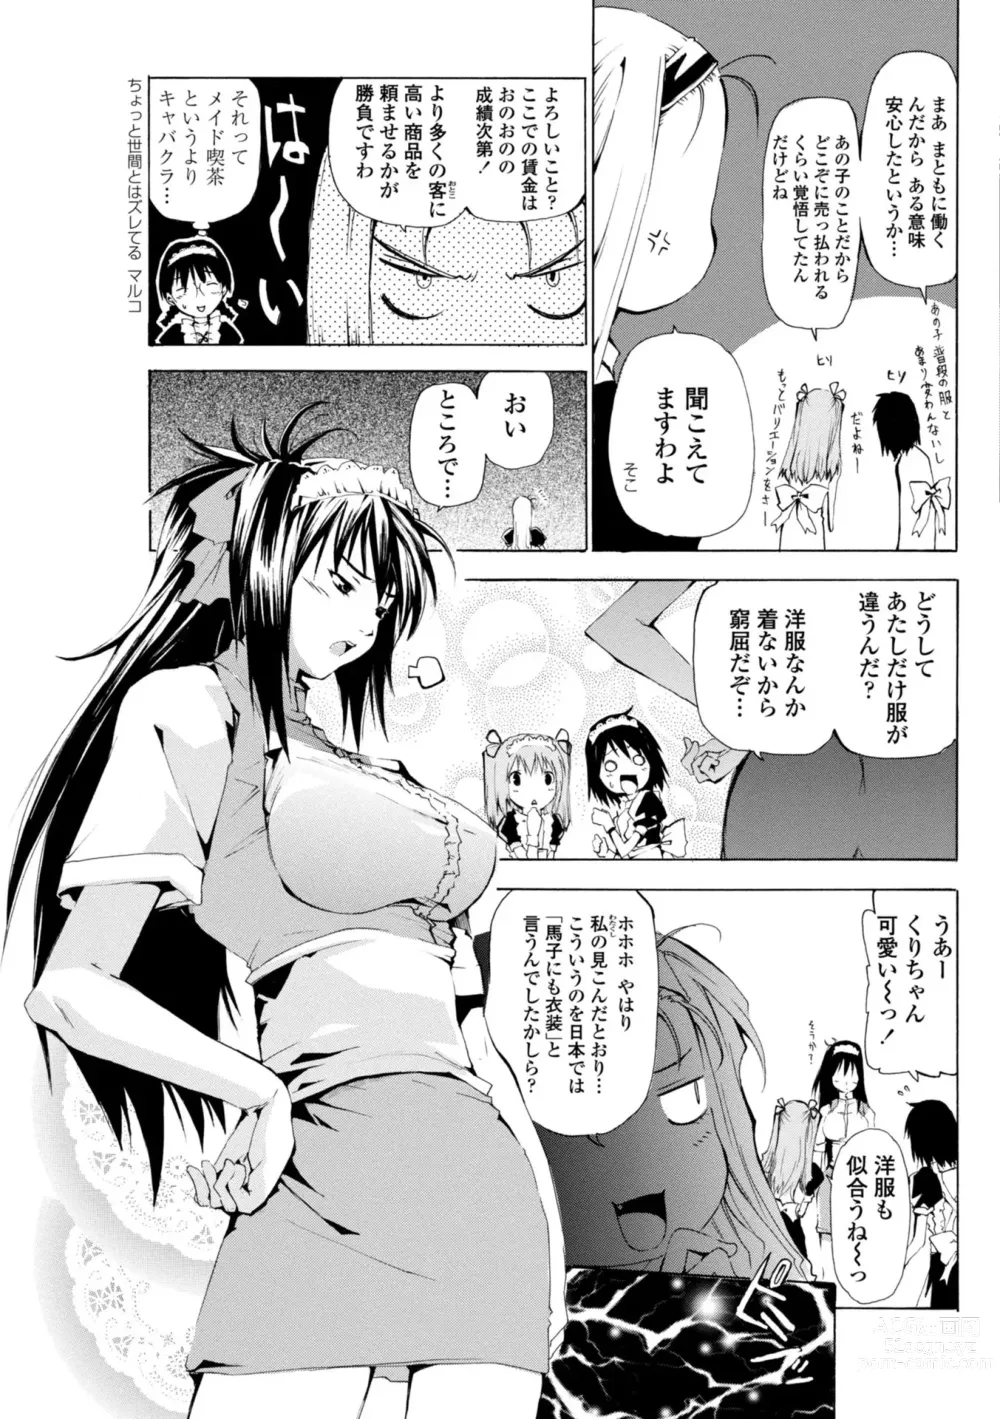 Page 7 of manga Houga Ge